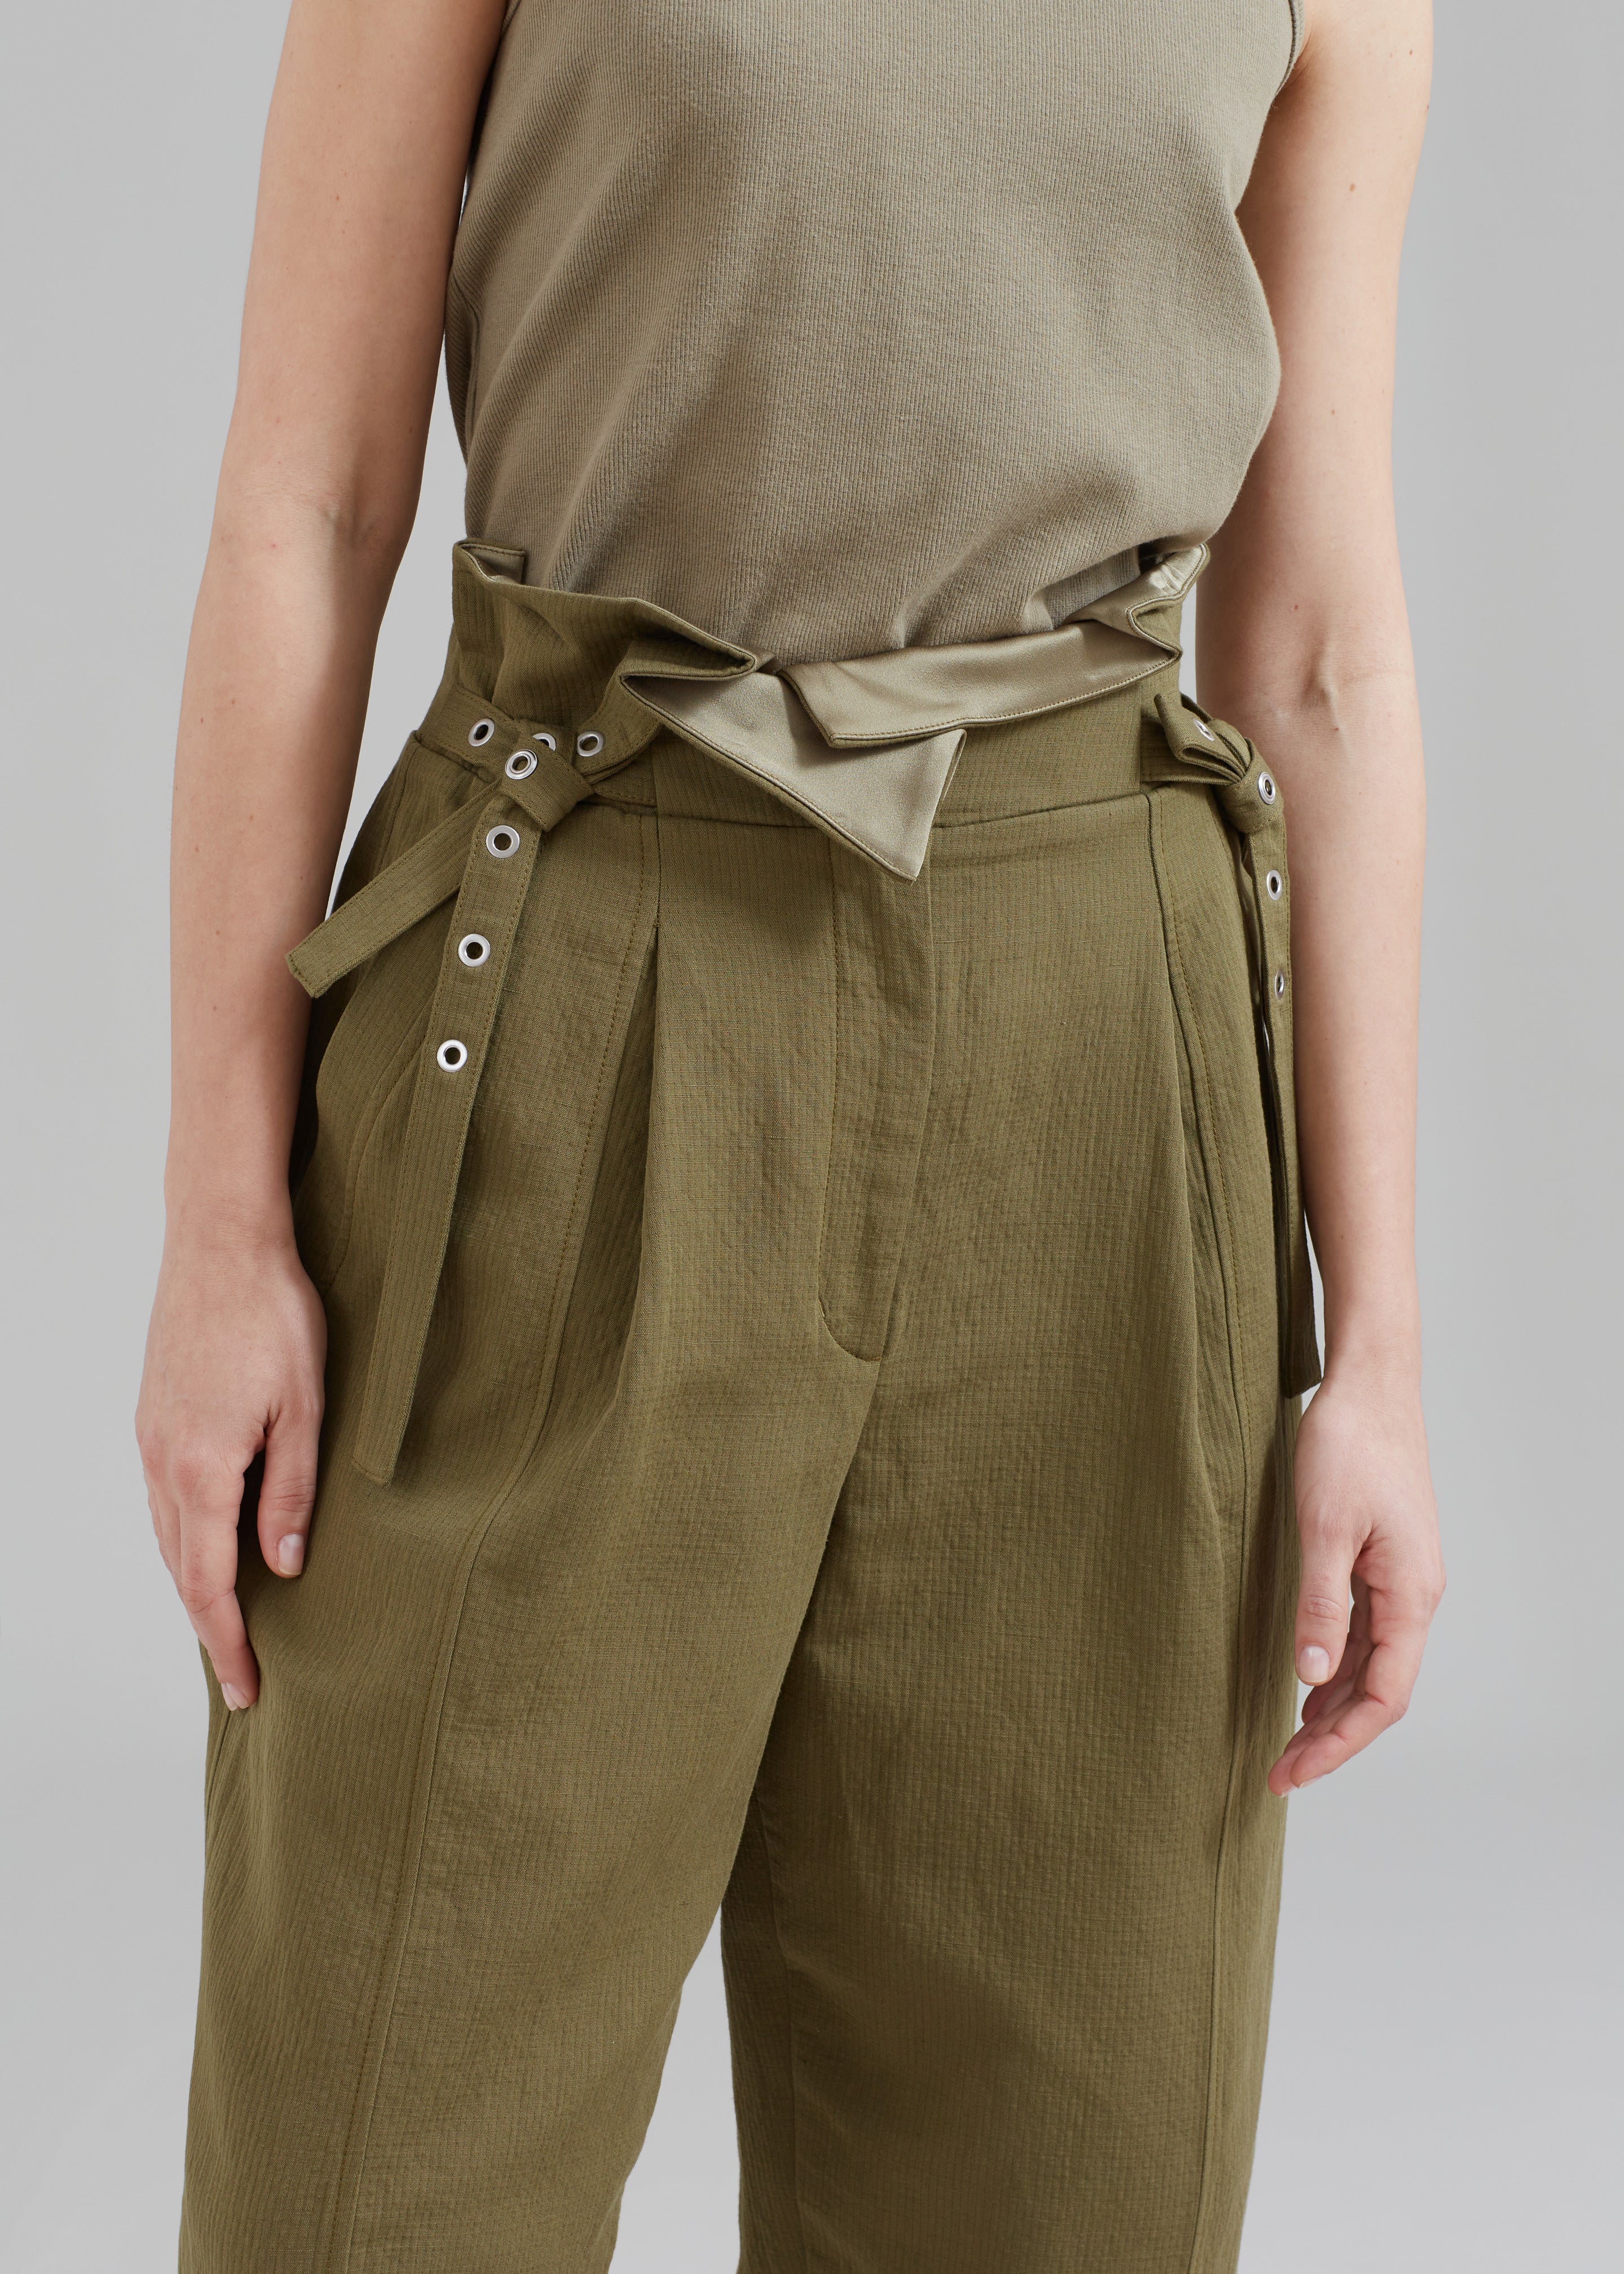 Camel Paperbag Pants - Brown Linen Pants - Waist Tie Belt Pants